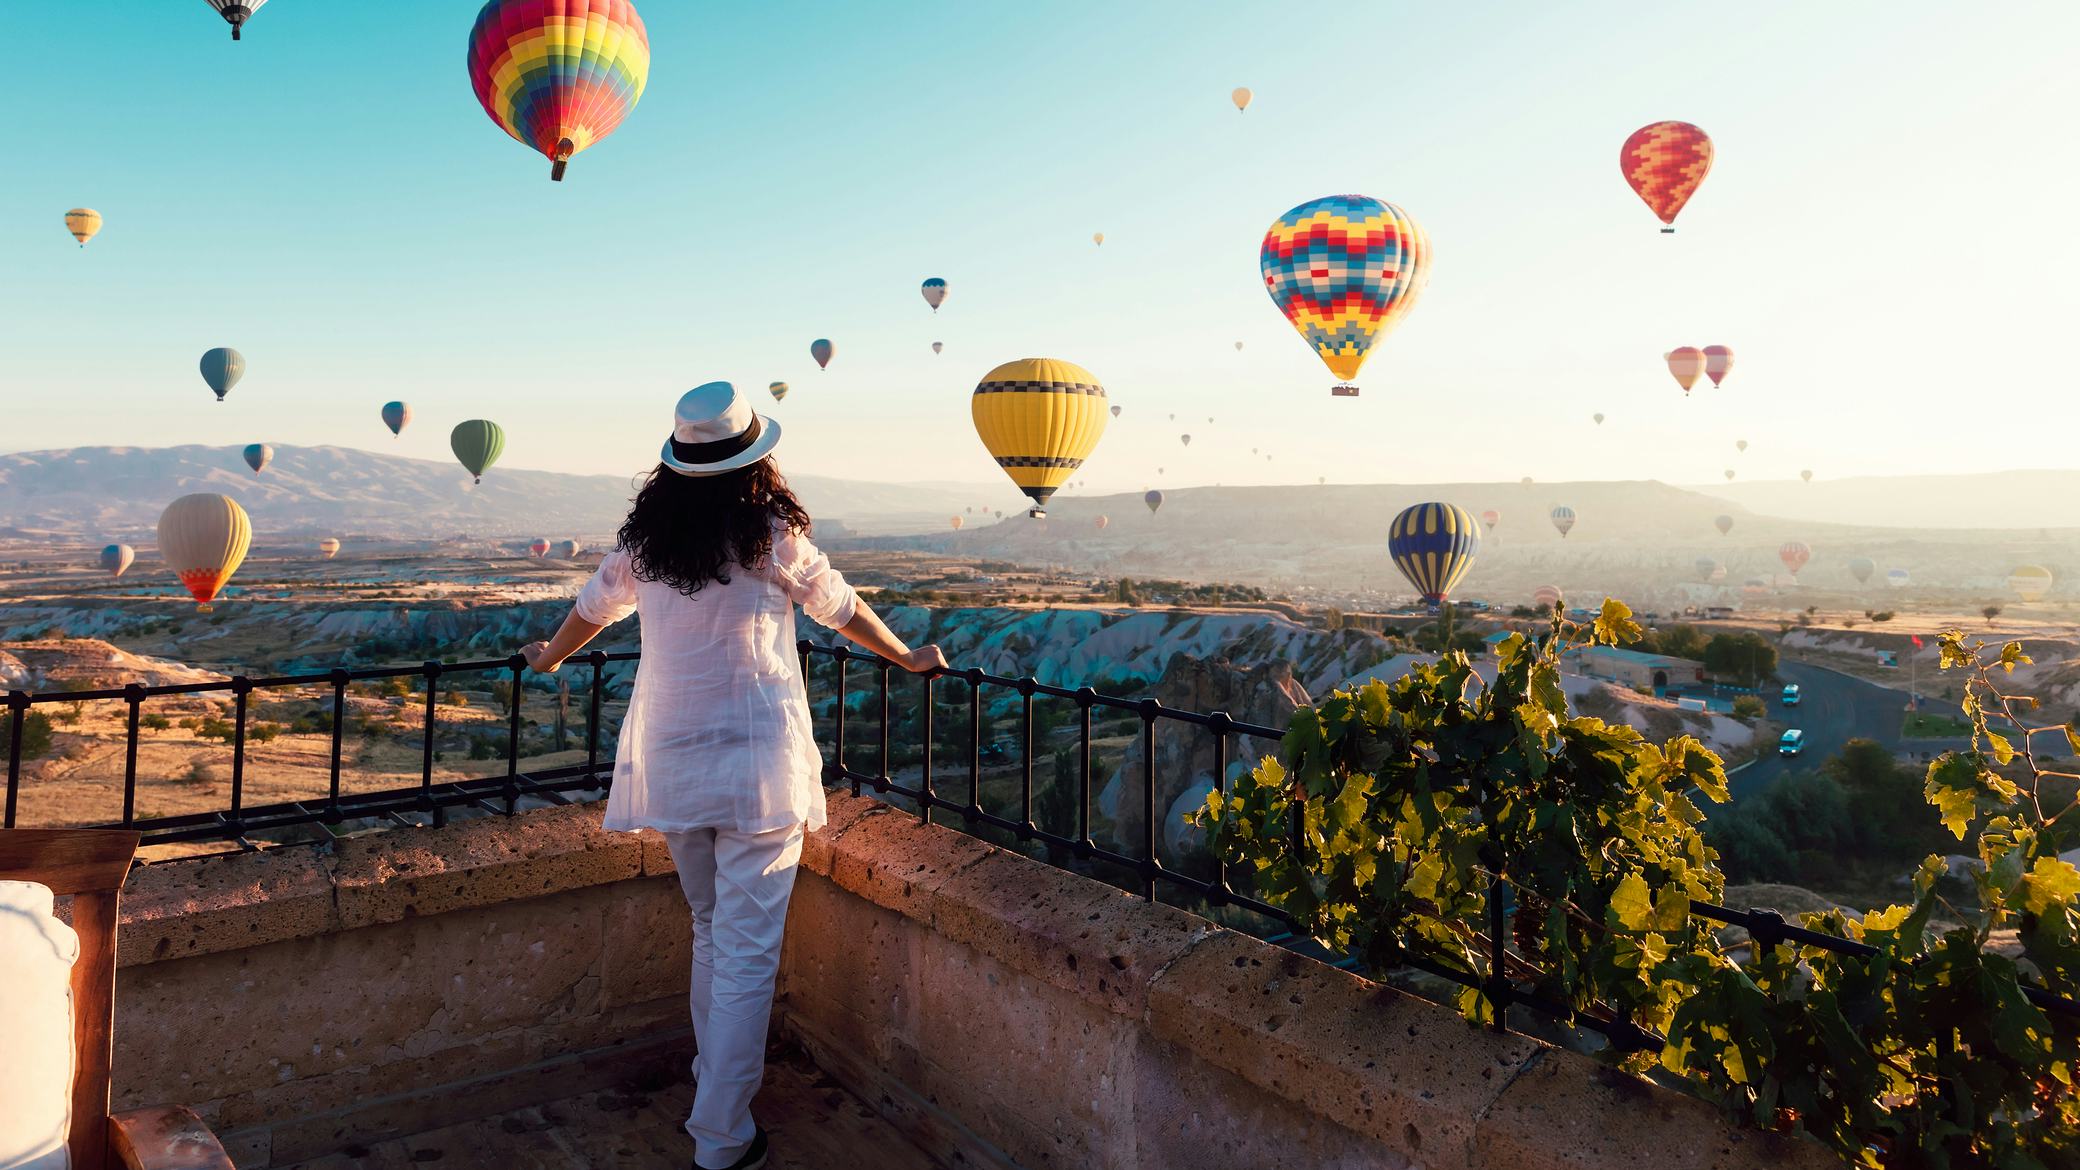 Woman watching hot air balloons fly in Cappadocia, Turkey 